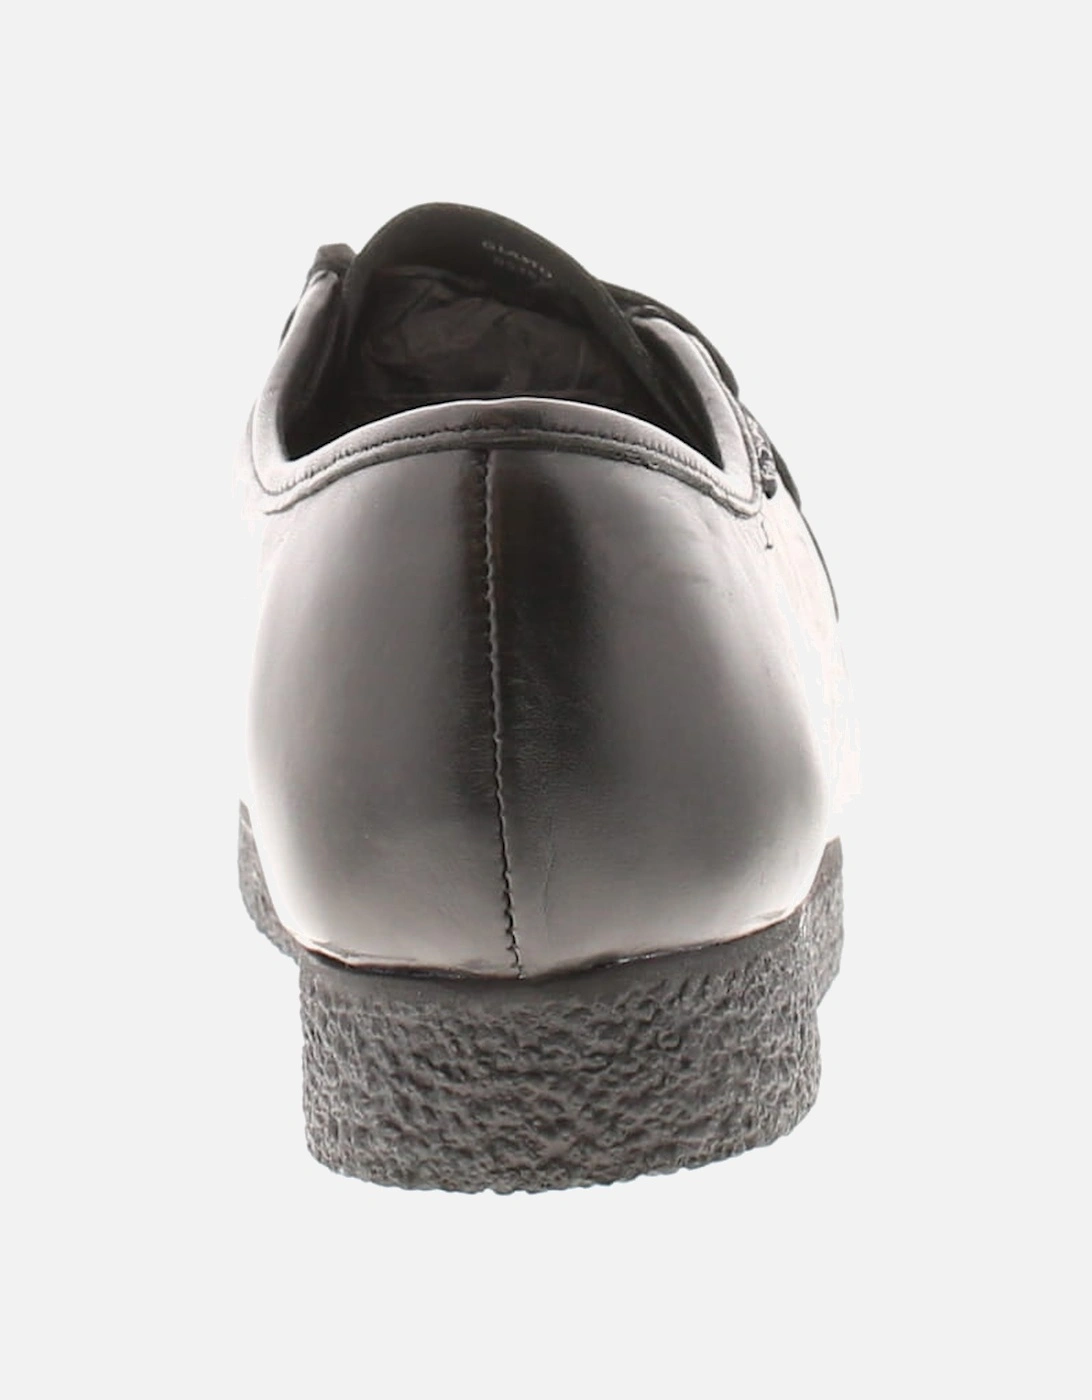 Mens Shoes Work School Glasto Leather black UK Size